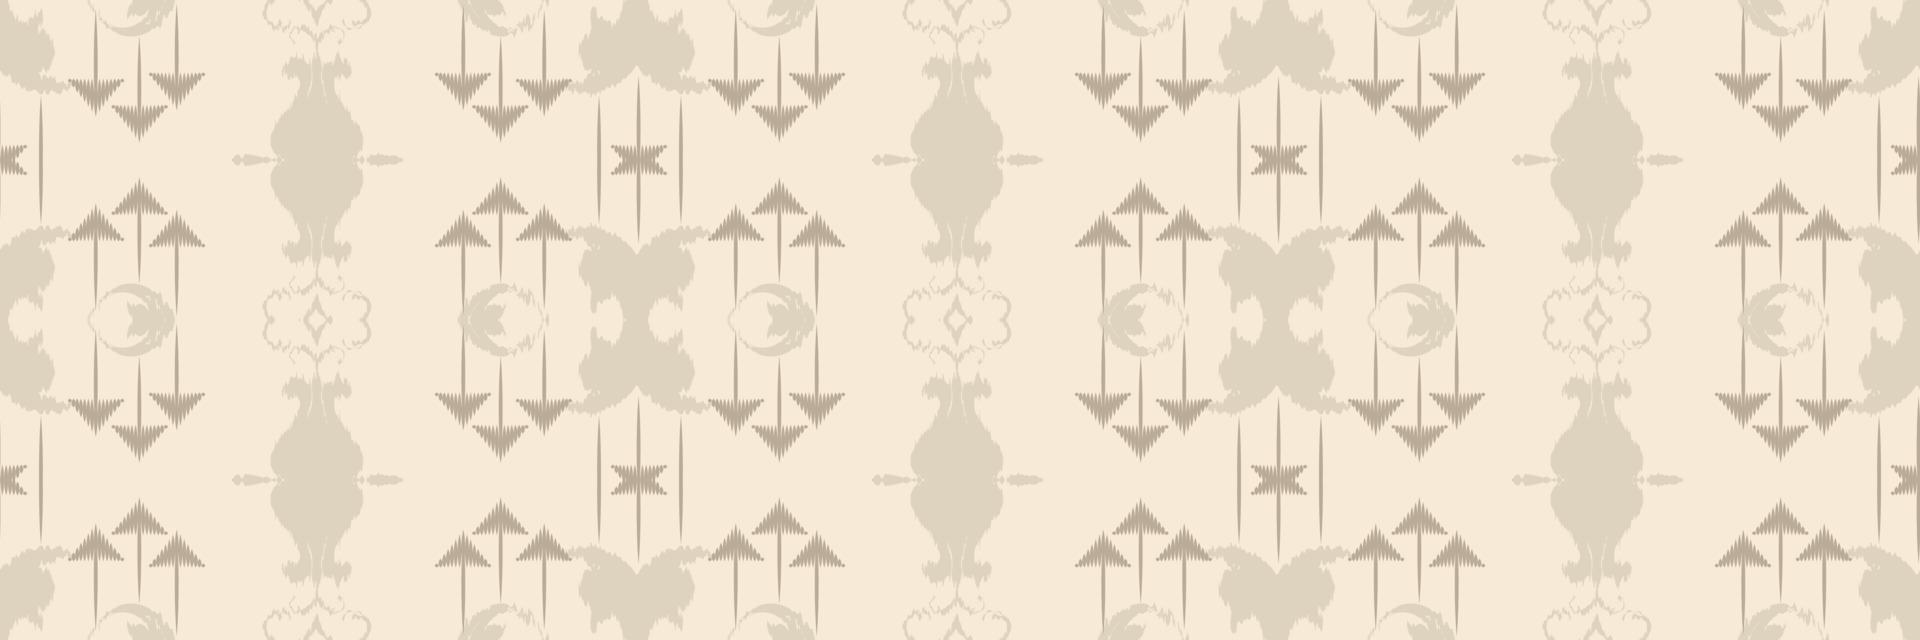 Batik Textile Ikkat or ikat design seamless pattern digital vector design for Print saree Kurti Borneo Fabric border brush symbols swatches party wear